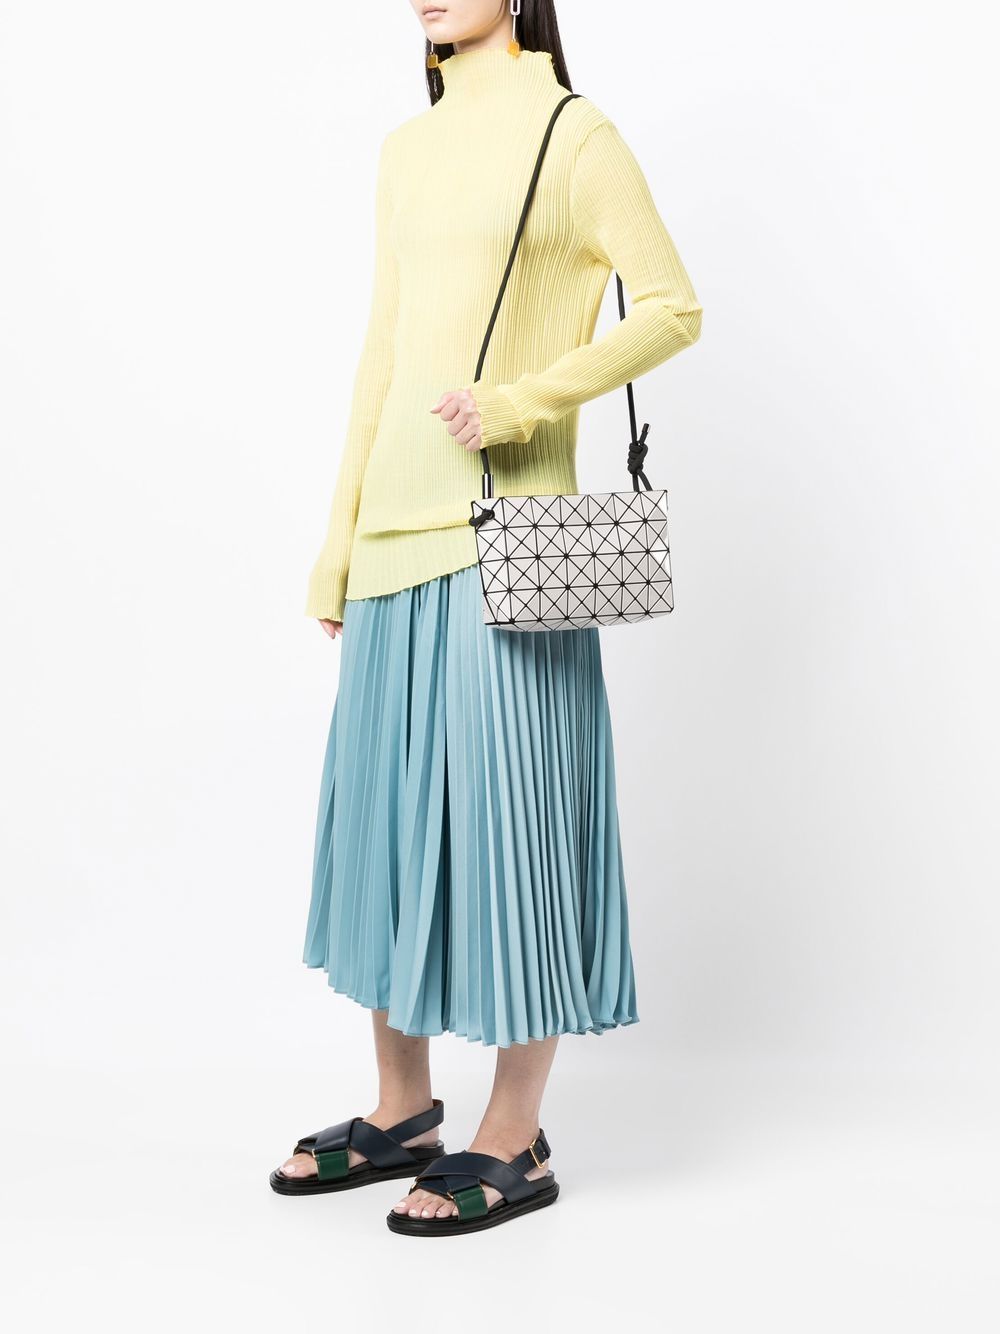 Women's Loop Matte Crossbody Bag by Bao Bao Issey Miyake